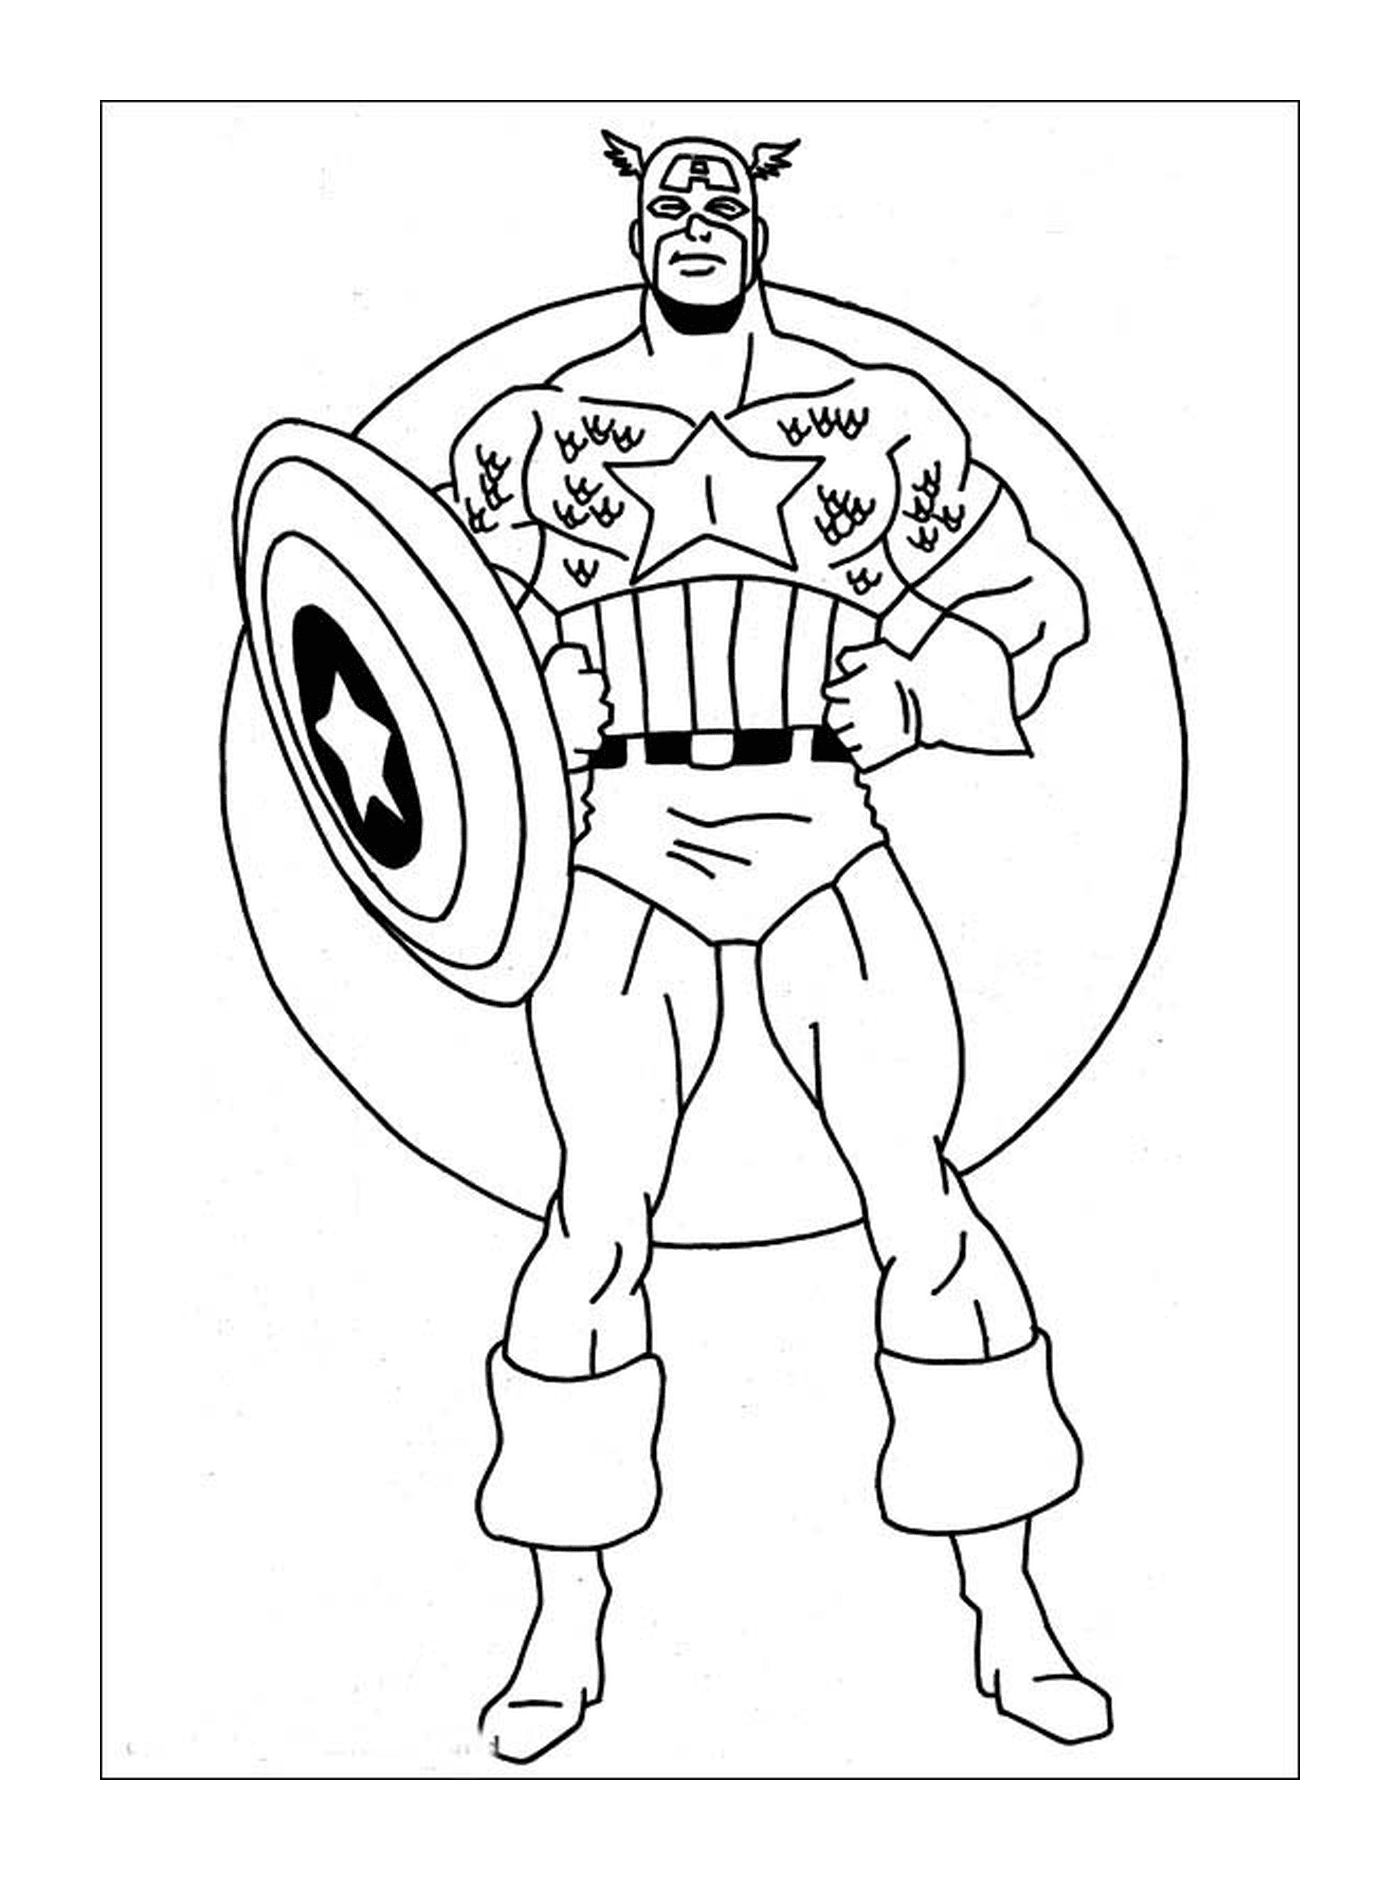   Une image de Captain America captivante 